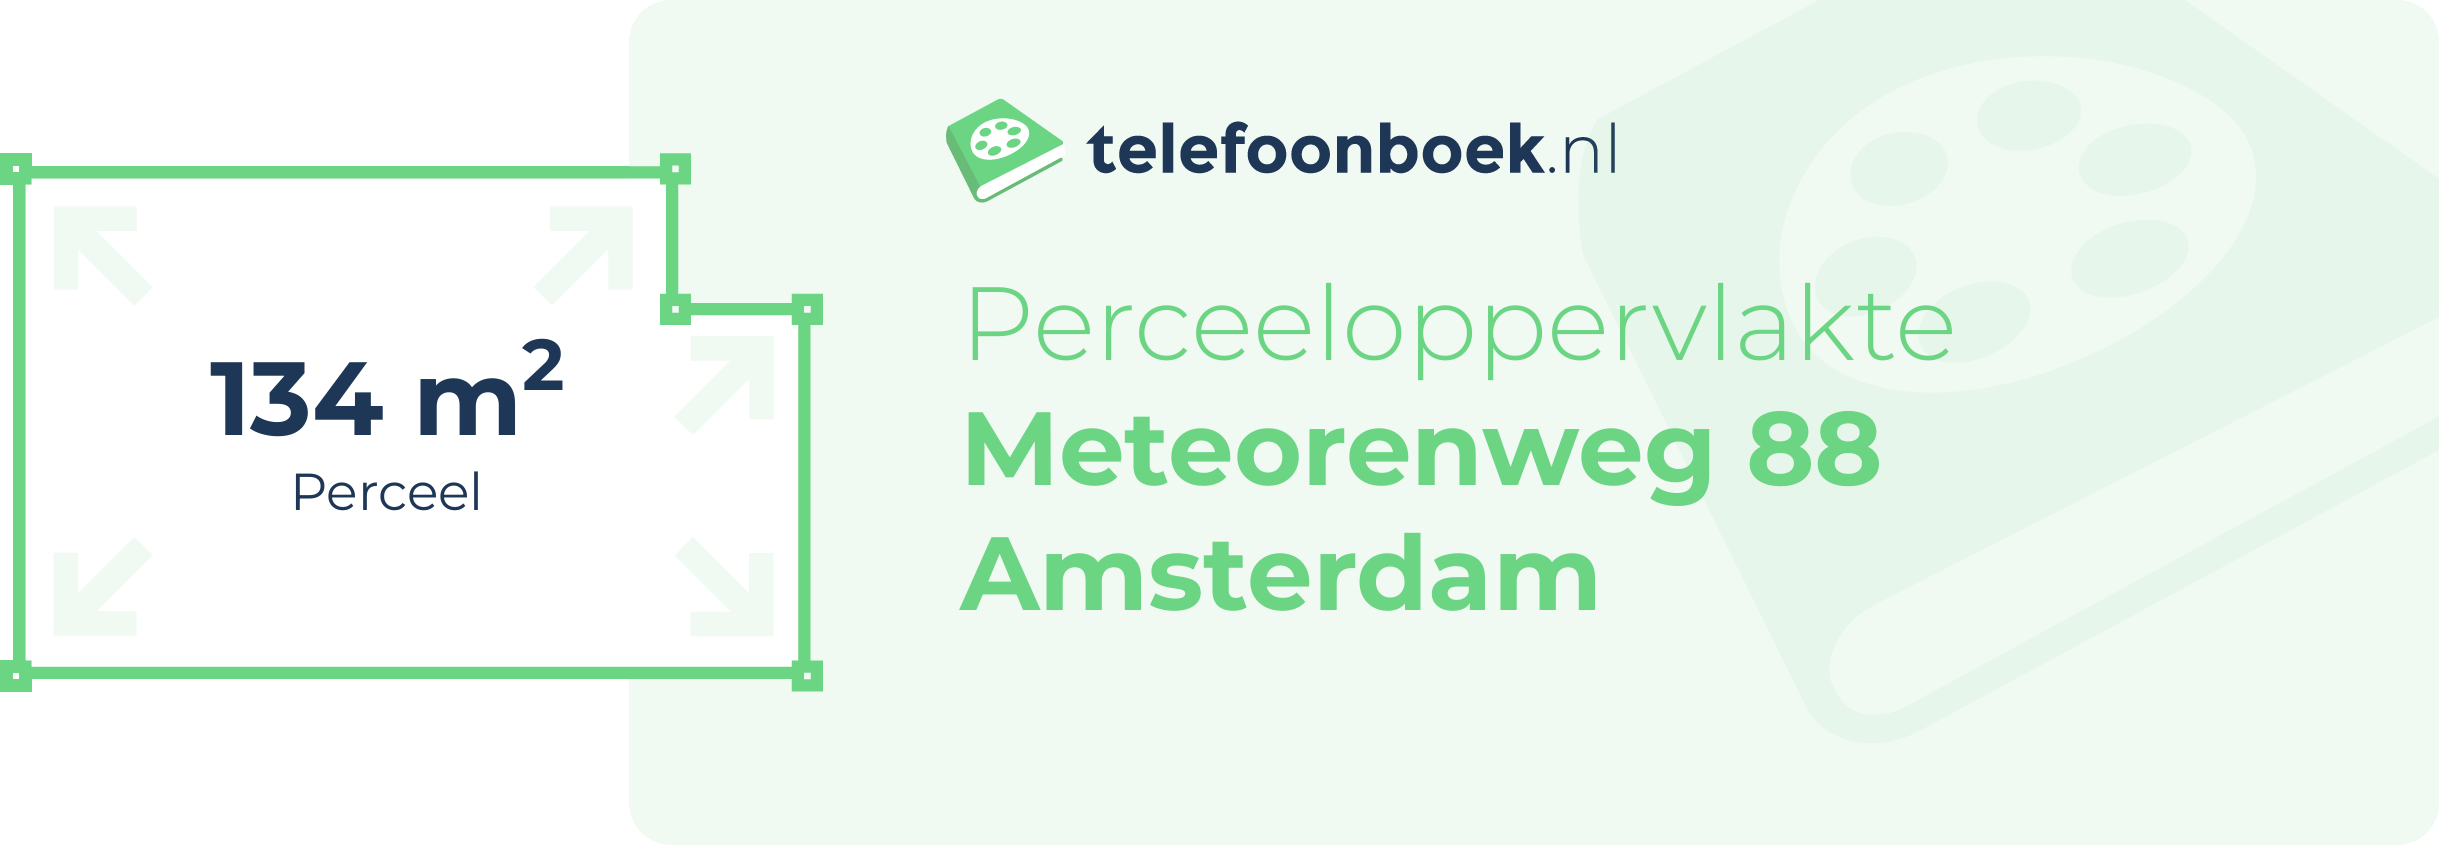 Perceeloppervlakte Meteorenweg 88 Amsterdam